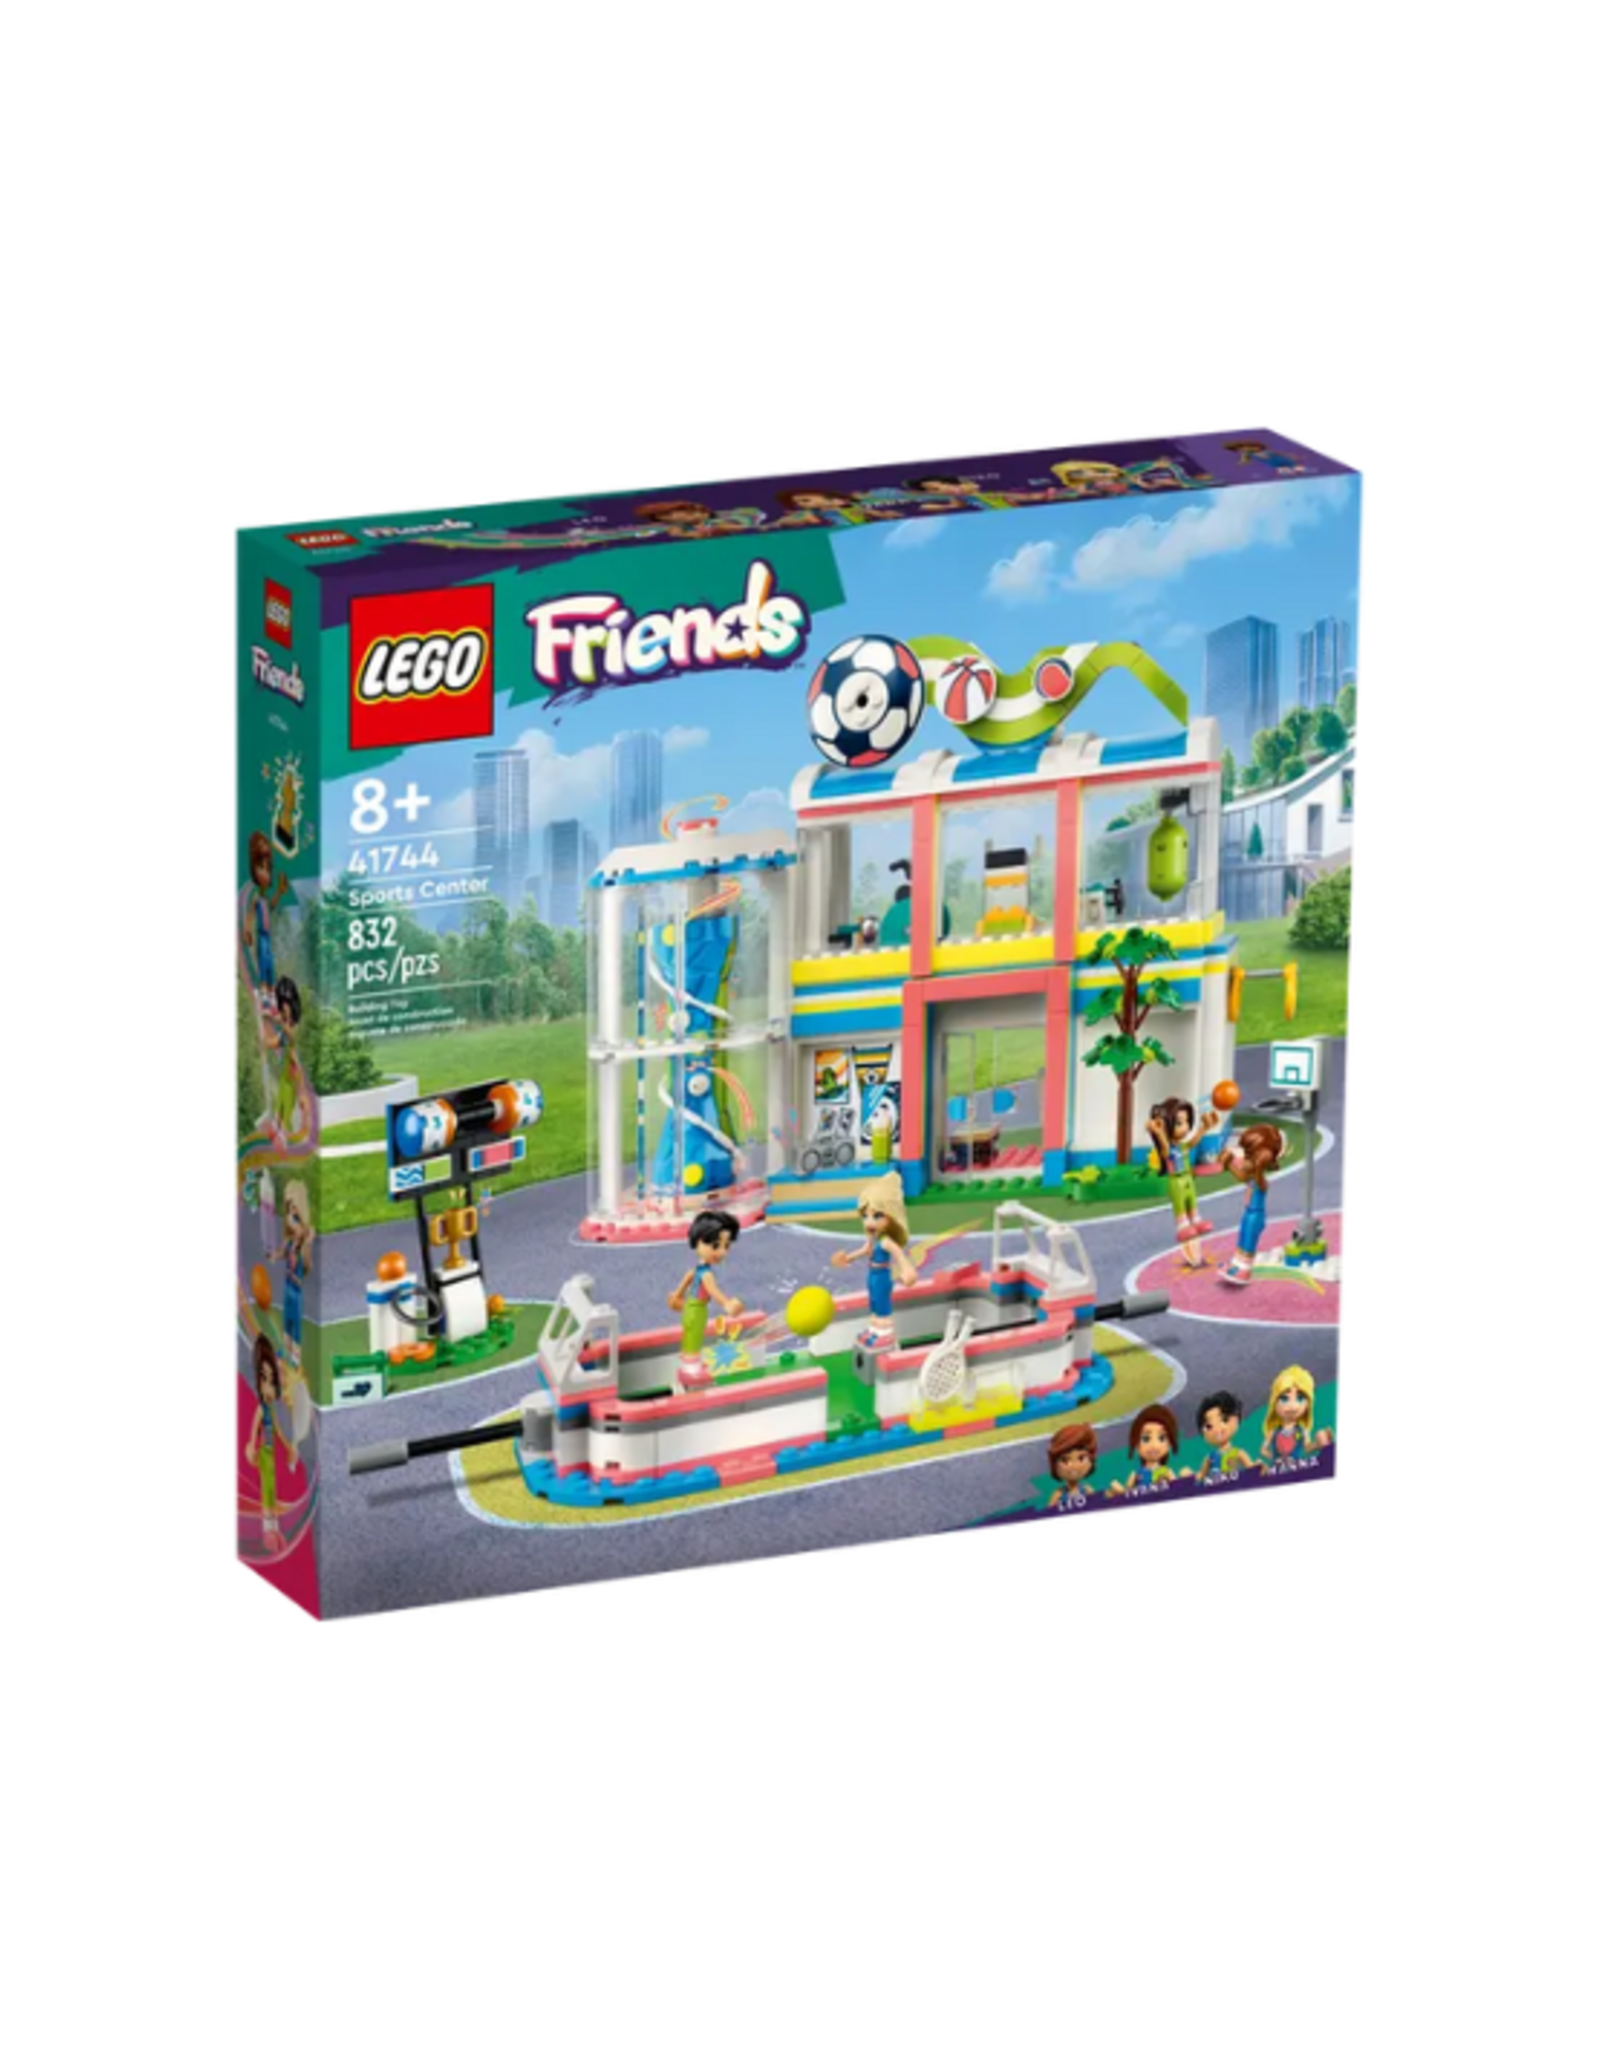 Lego - Friends - 41744 - Sports Center - ToymastersMB.ca